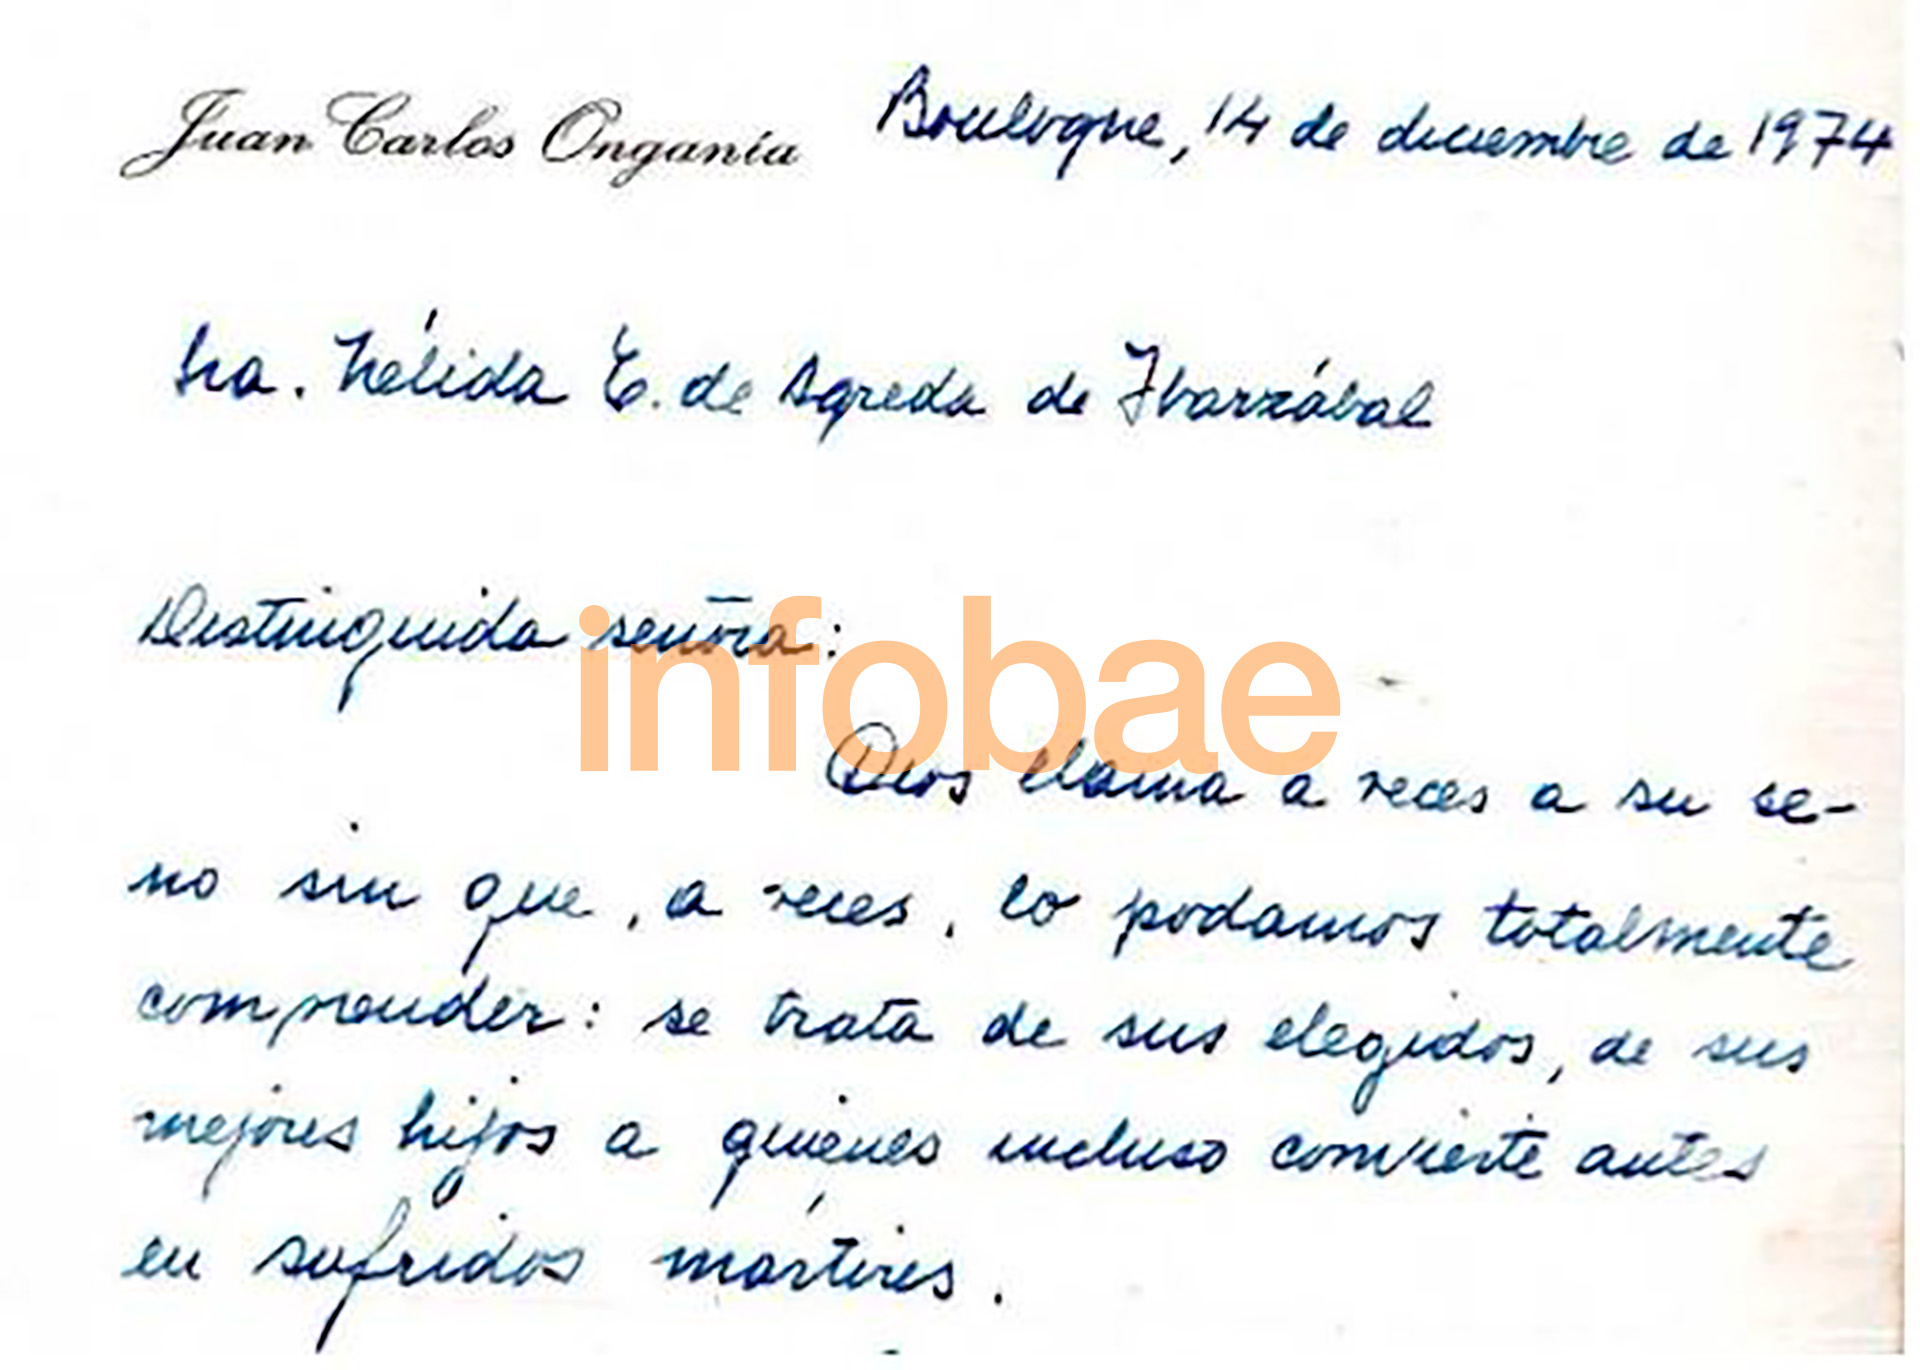 Carta de Juan Carlos Onganía